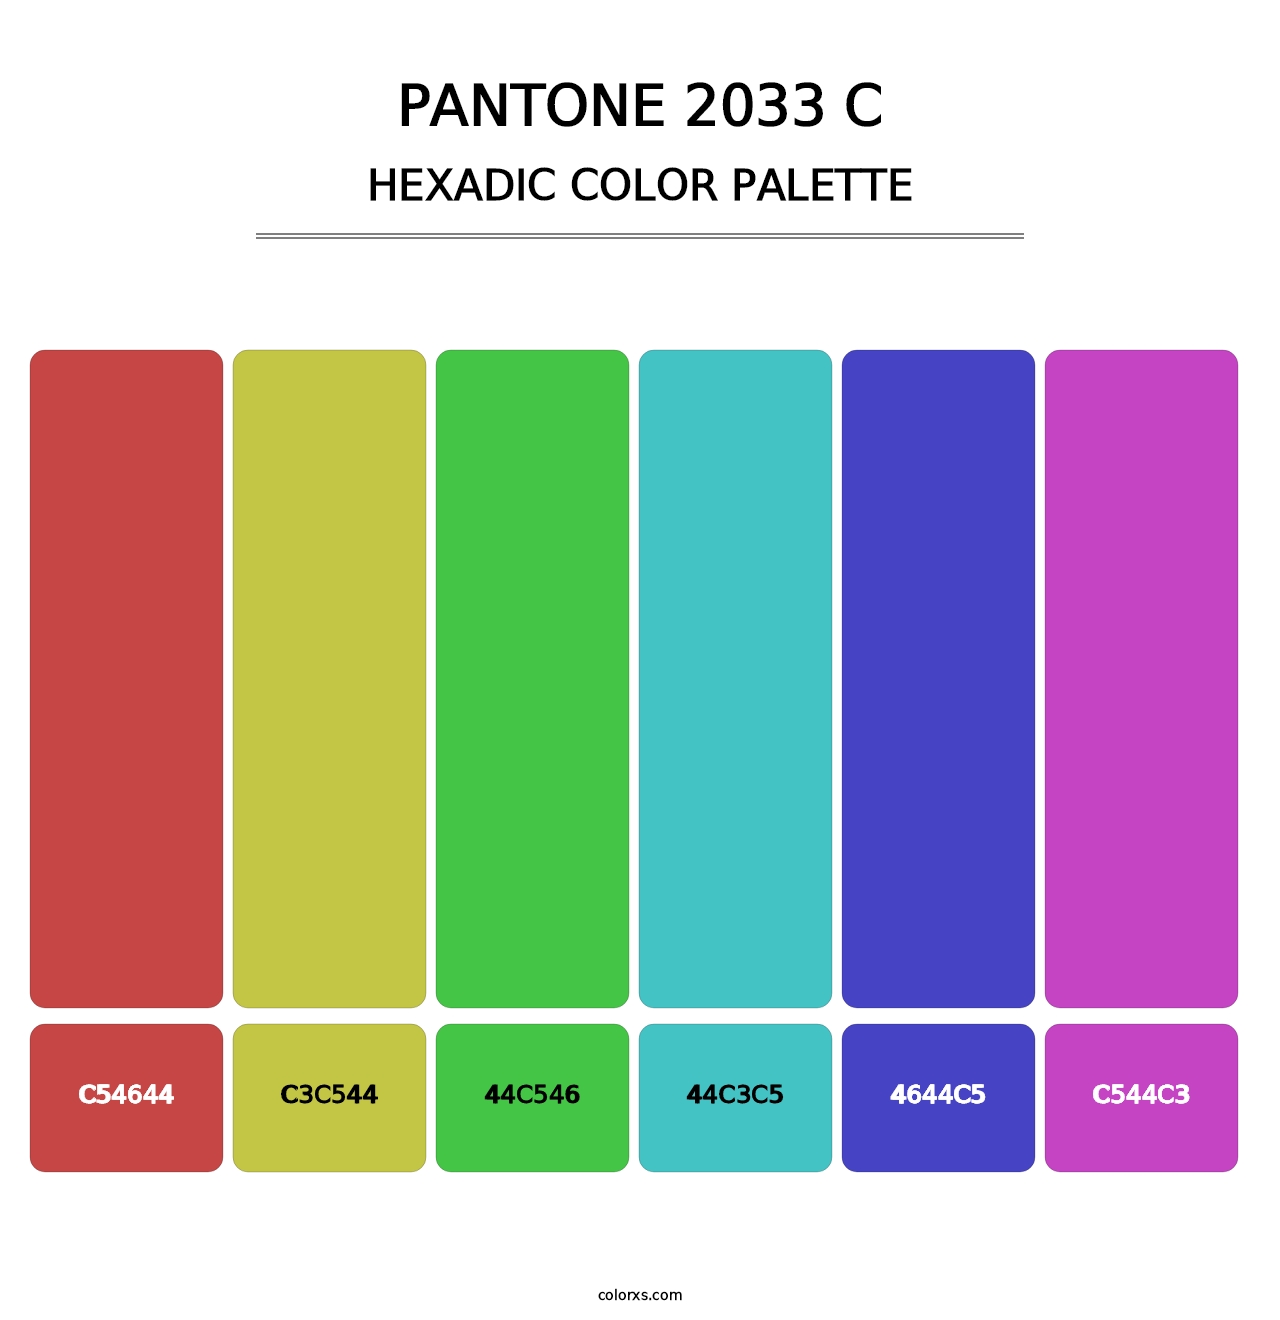 PANTONE 2033 C - Hexadic Color Palette